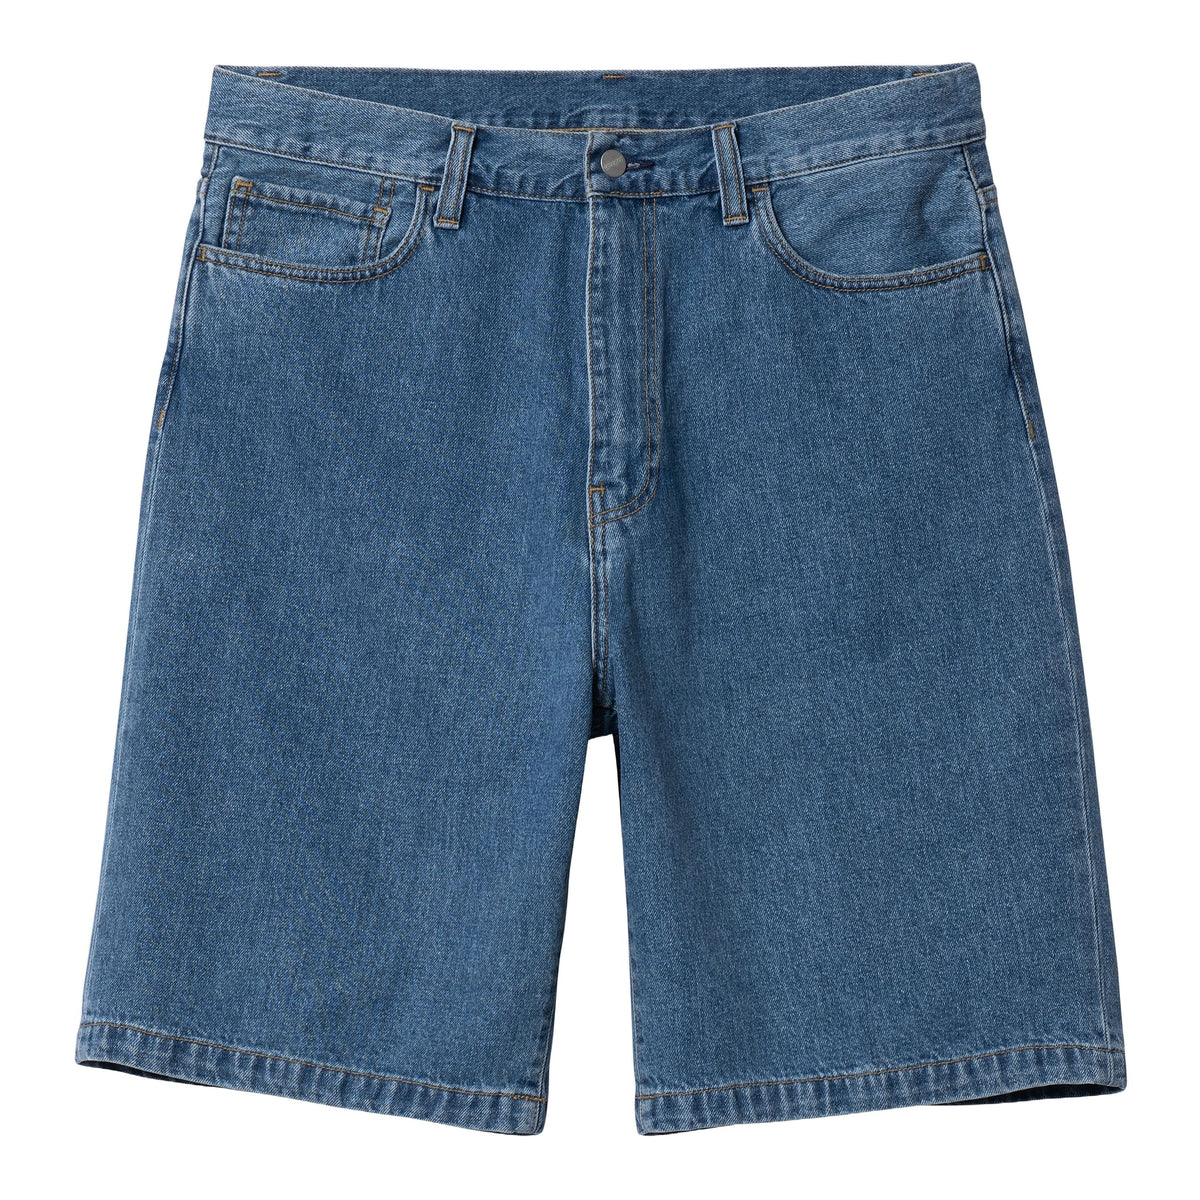 Carhartt Wip Landon men's jeans shorts